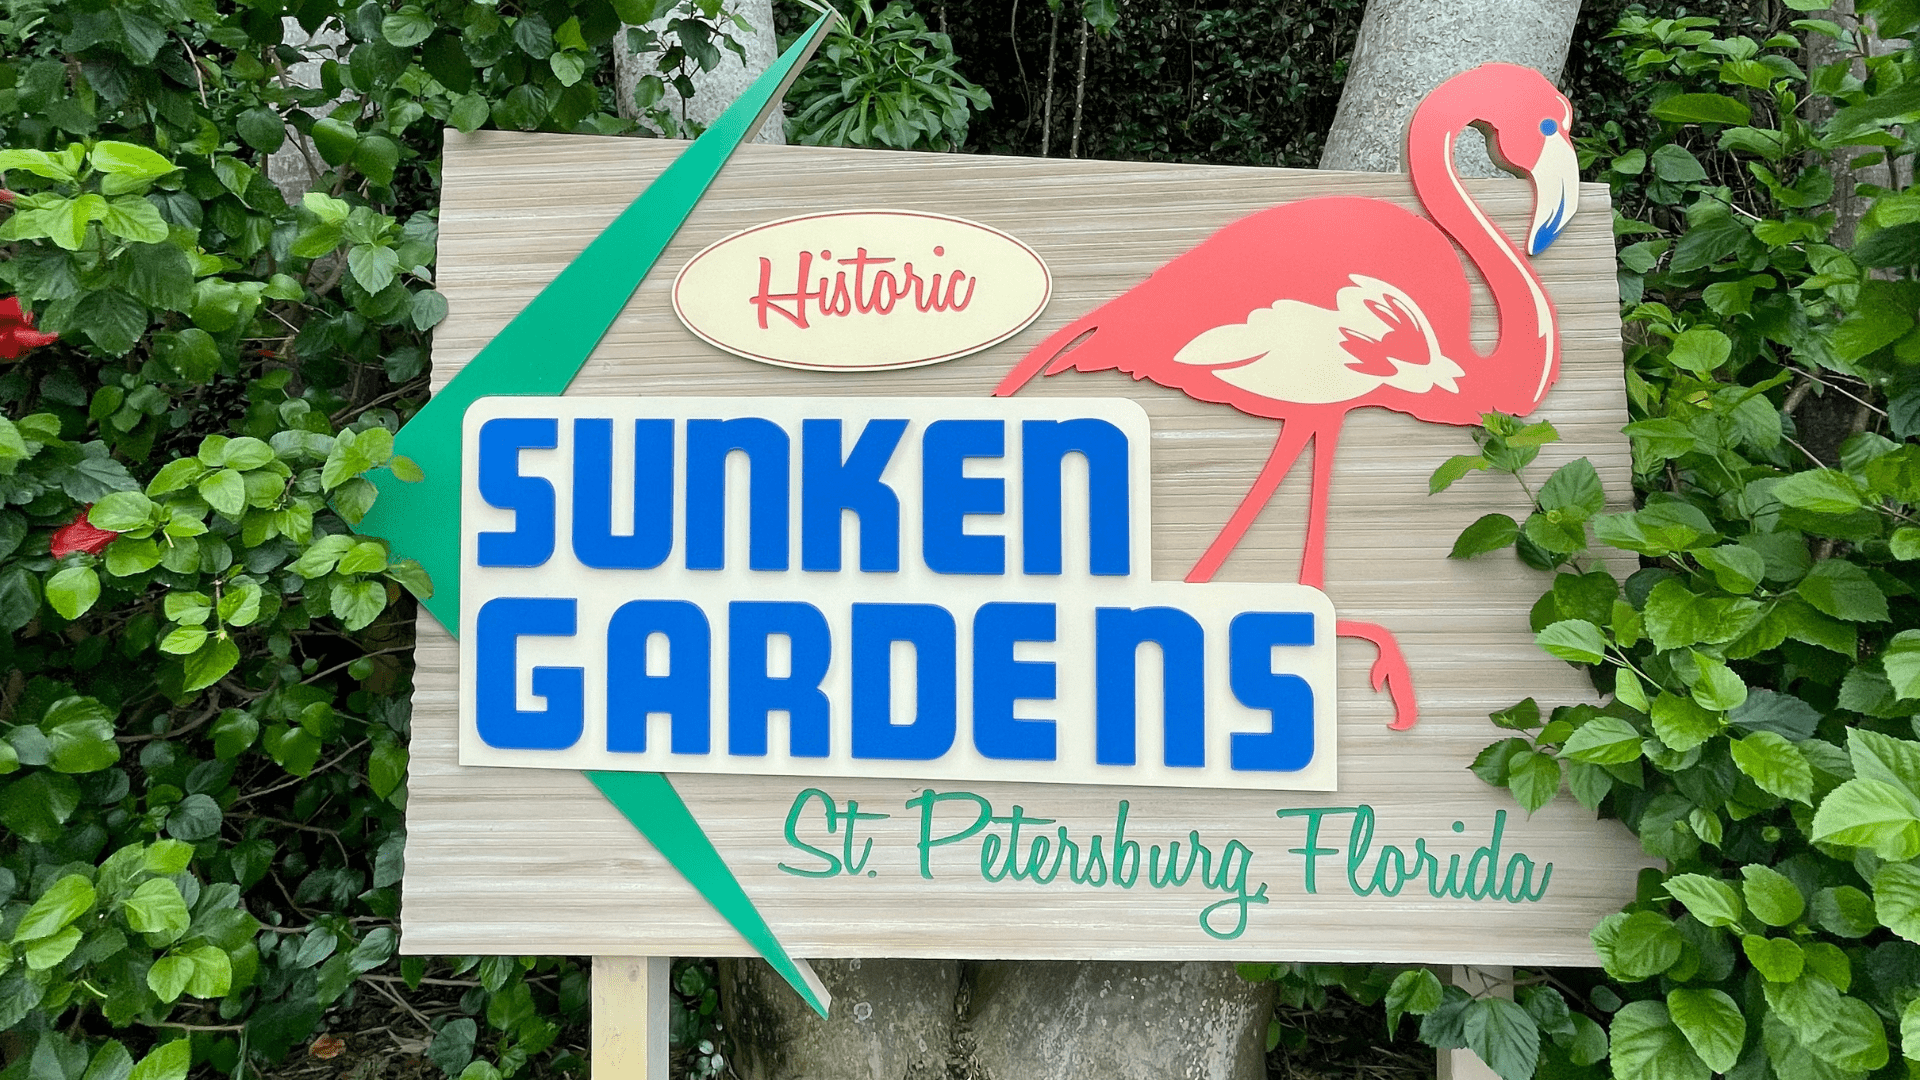 The Sunken Gardens welcome sign